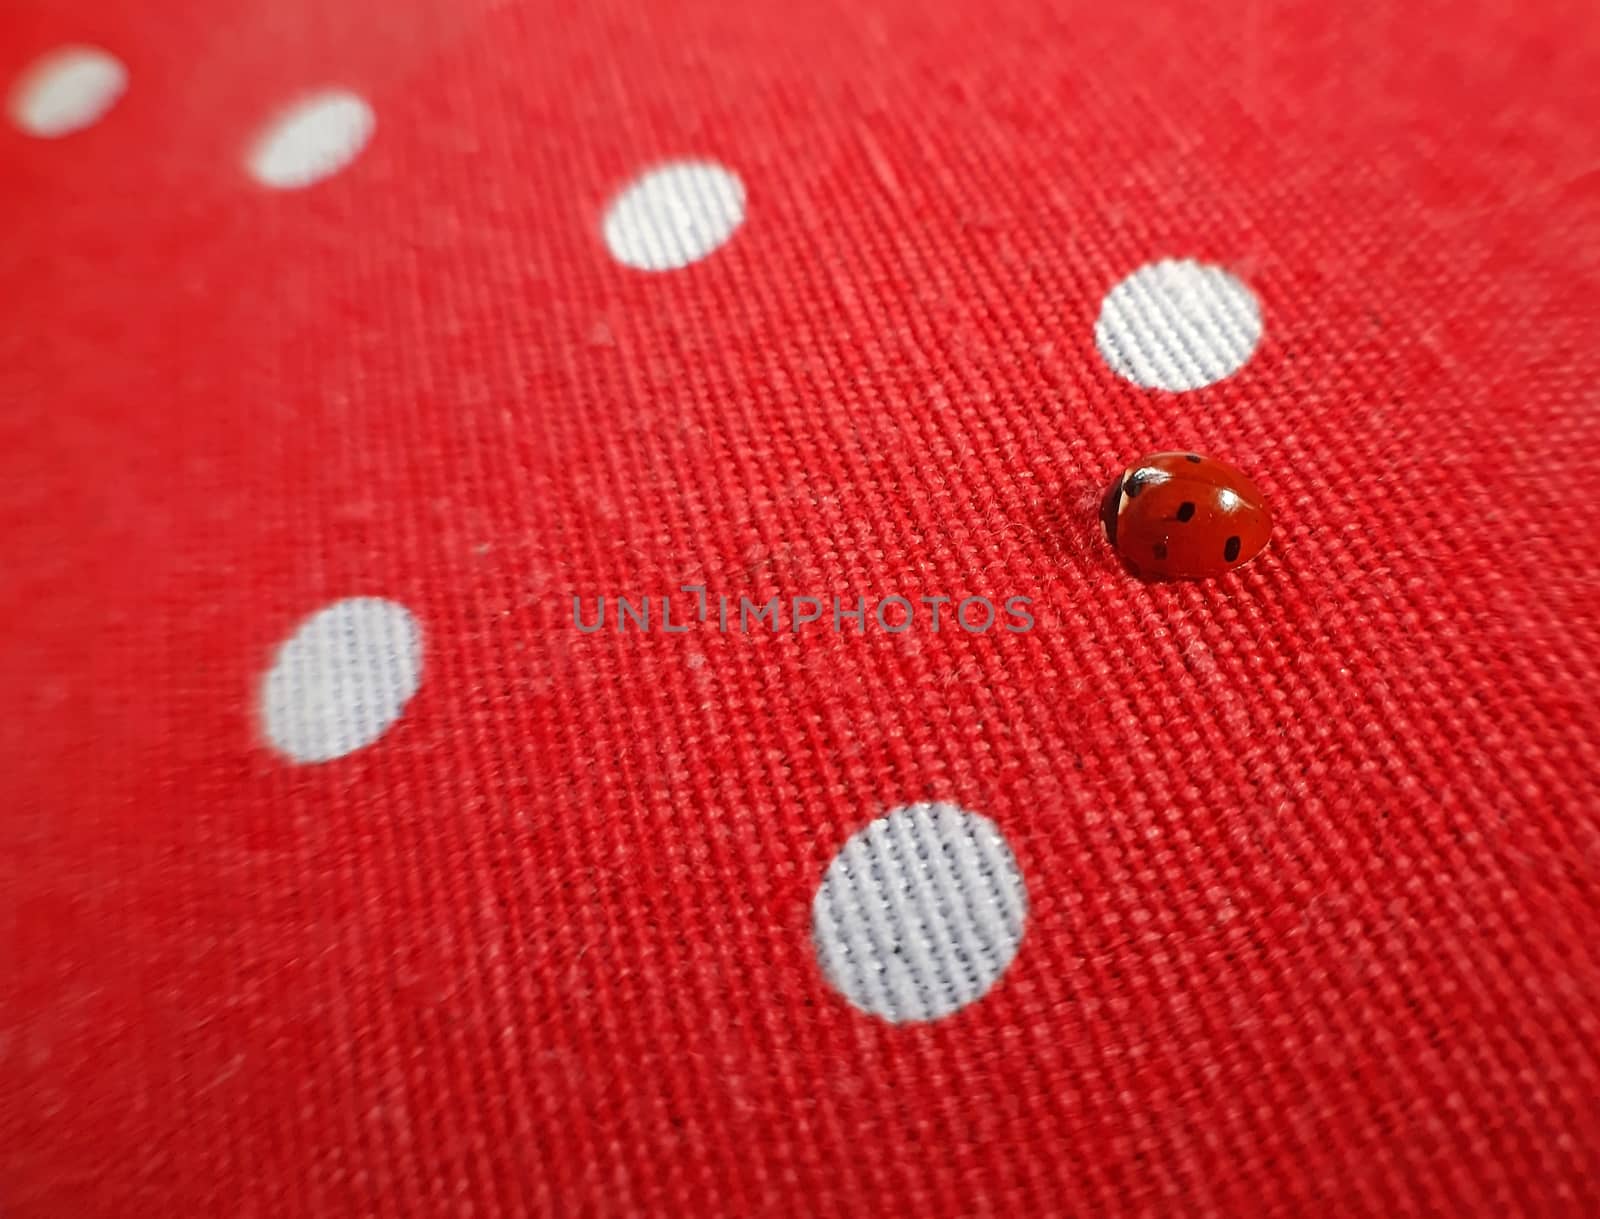 A ladybug. Macro photography red fabric background.